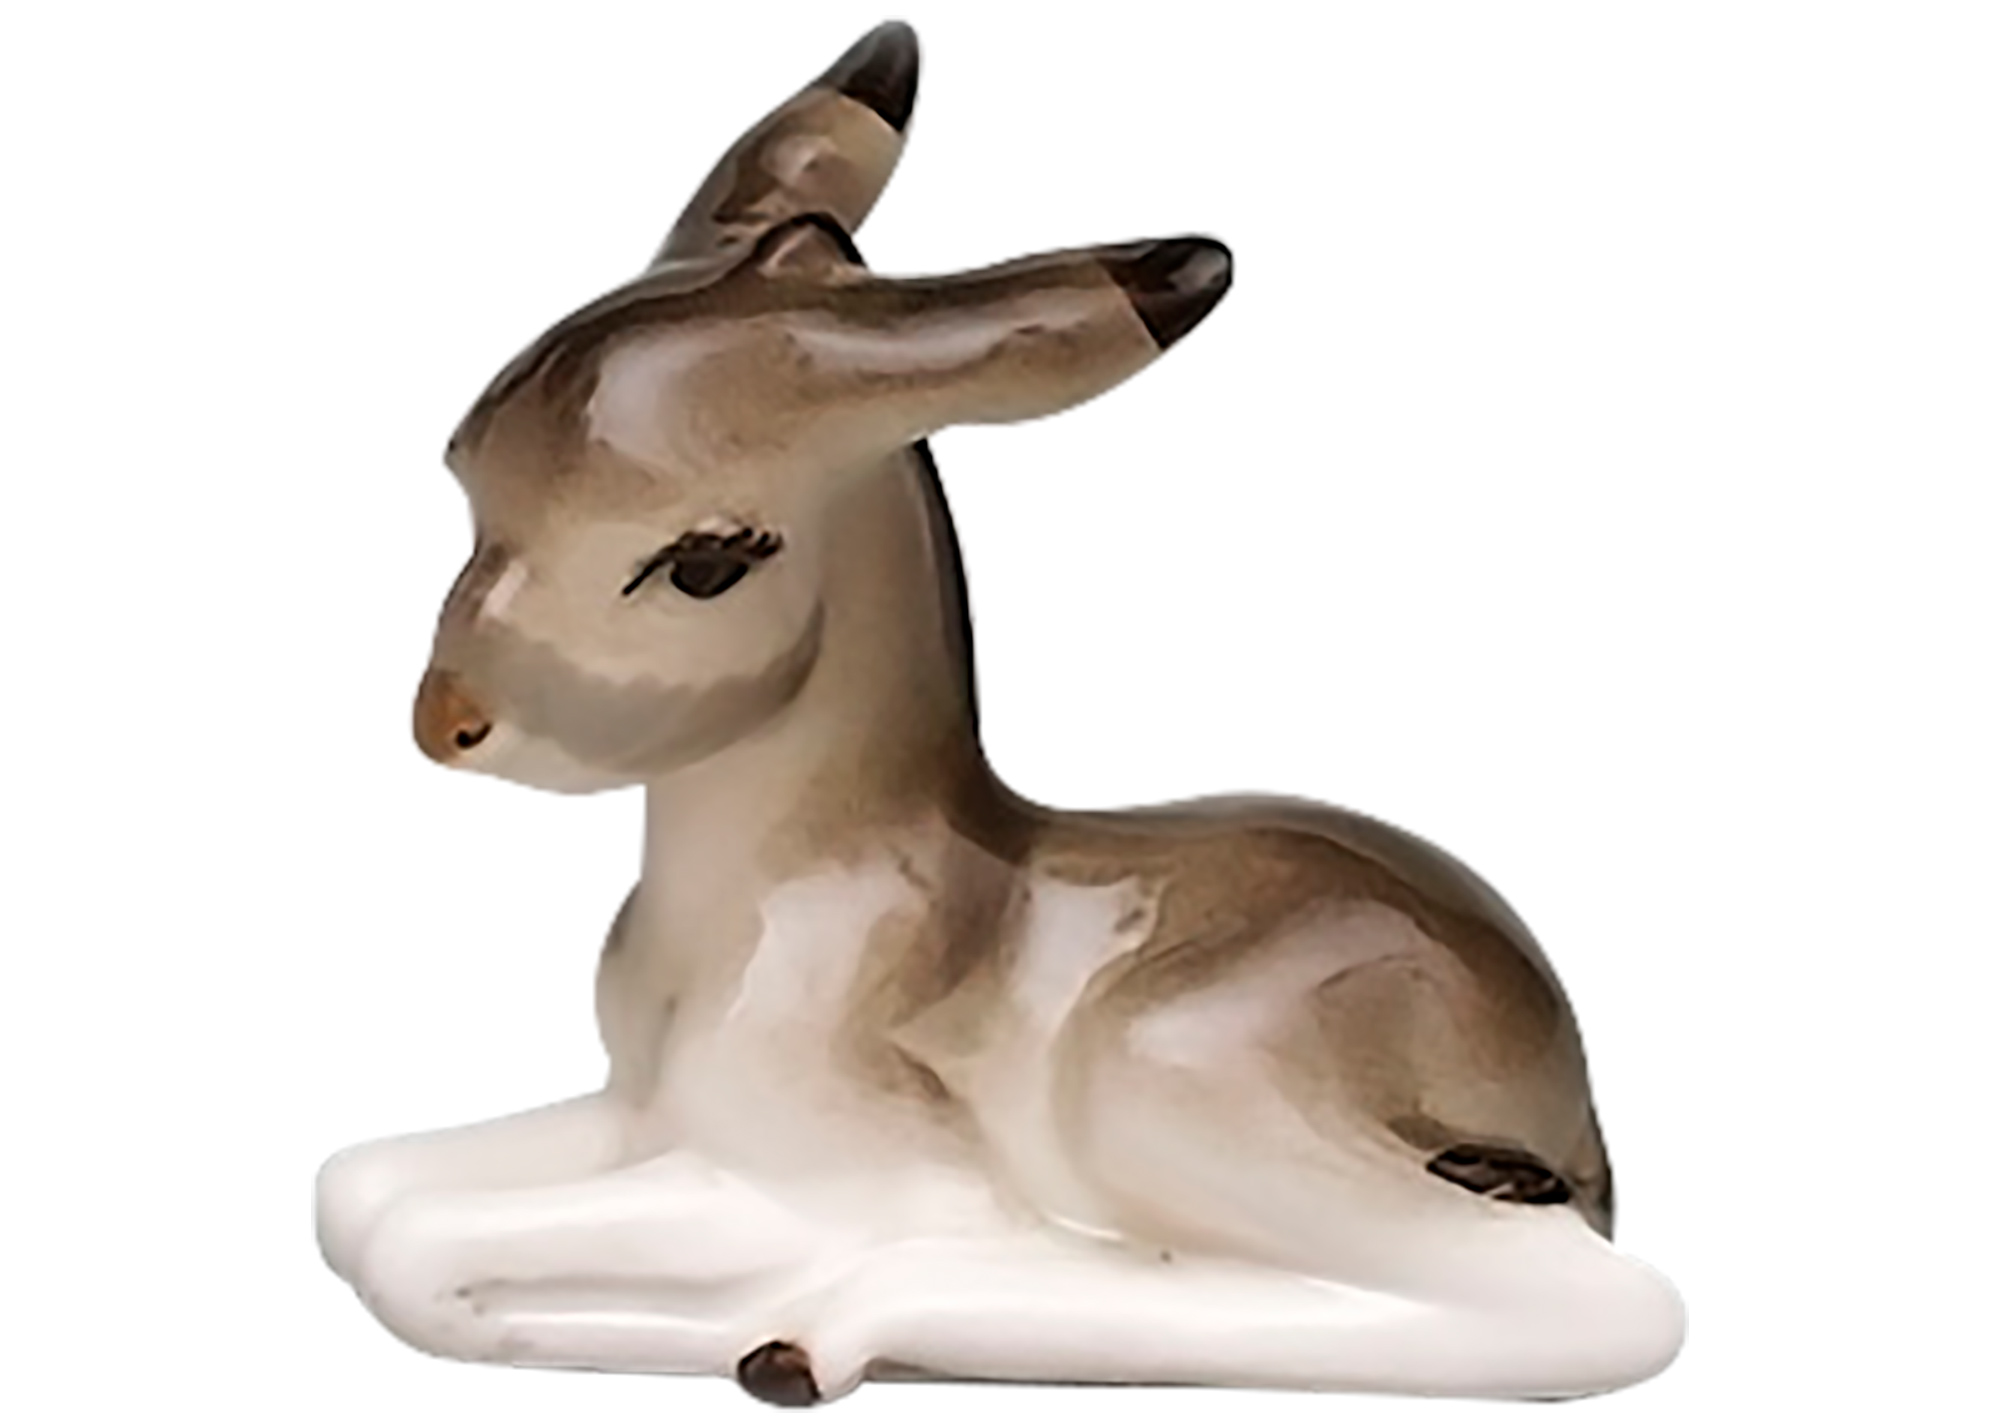 Buy Miniature Donkey Figurine at GoldenCockerel.com